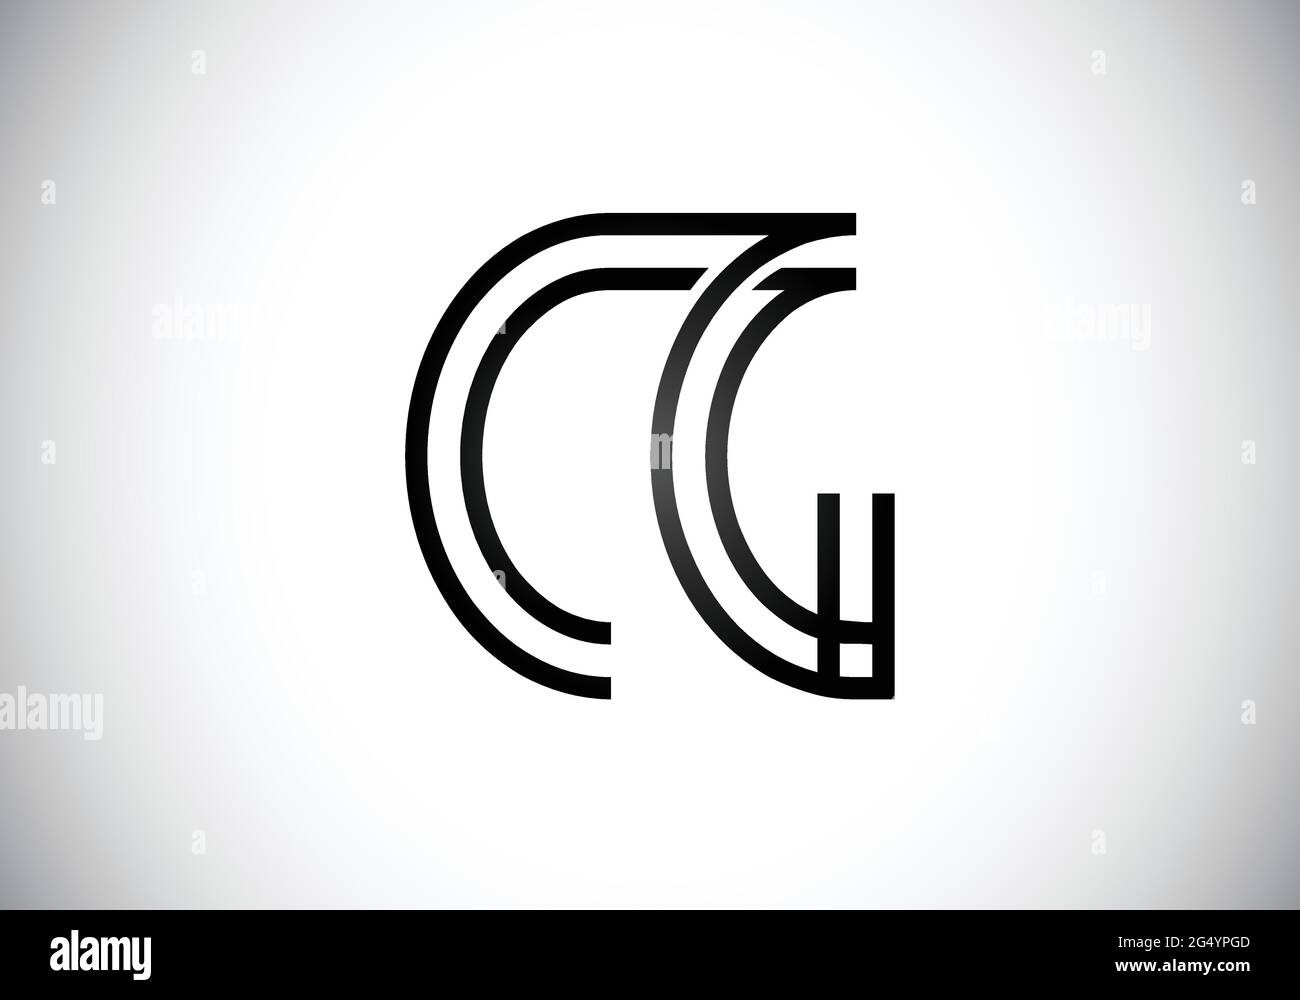 Initial CG Letter Logo mit Creative Modern Business Typography Vektor-Vorlage. Kreativer abstrakter Monogramm-Buchstabe CG Stock Vektor